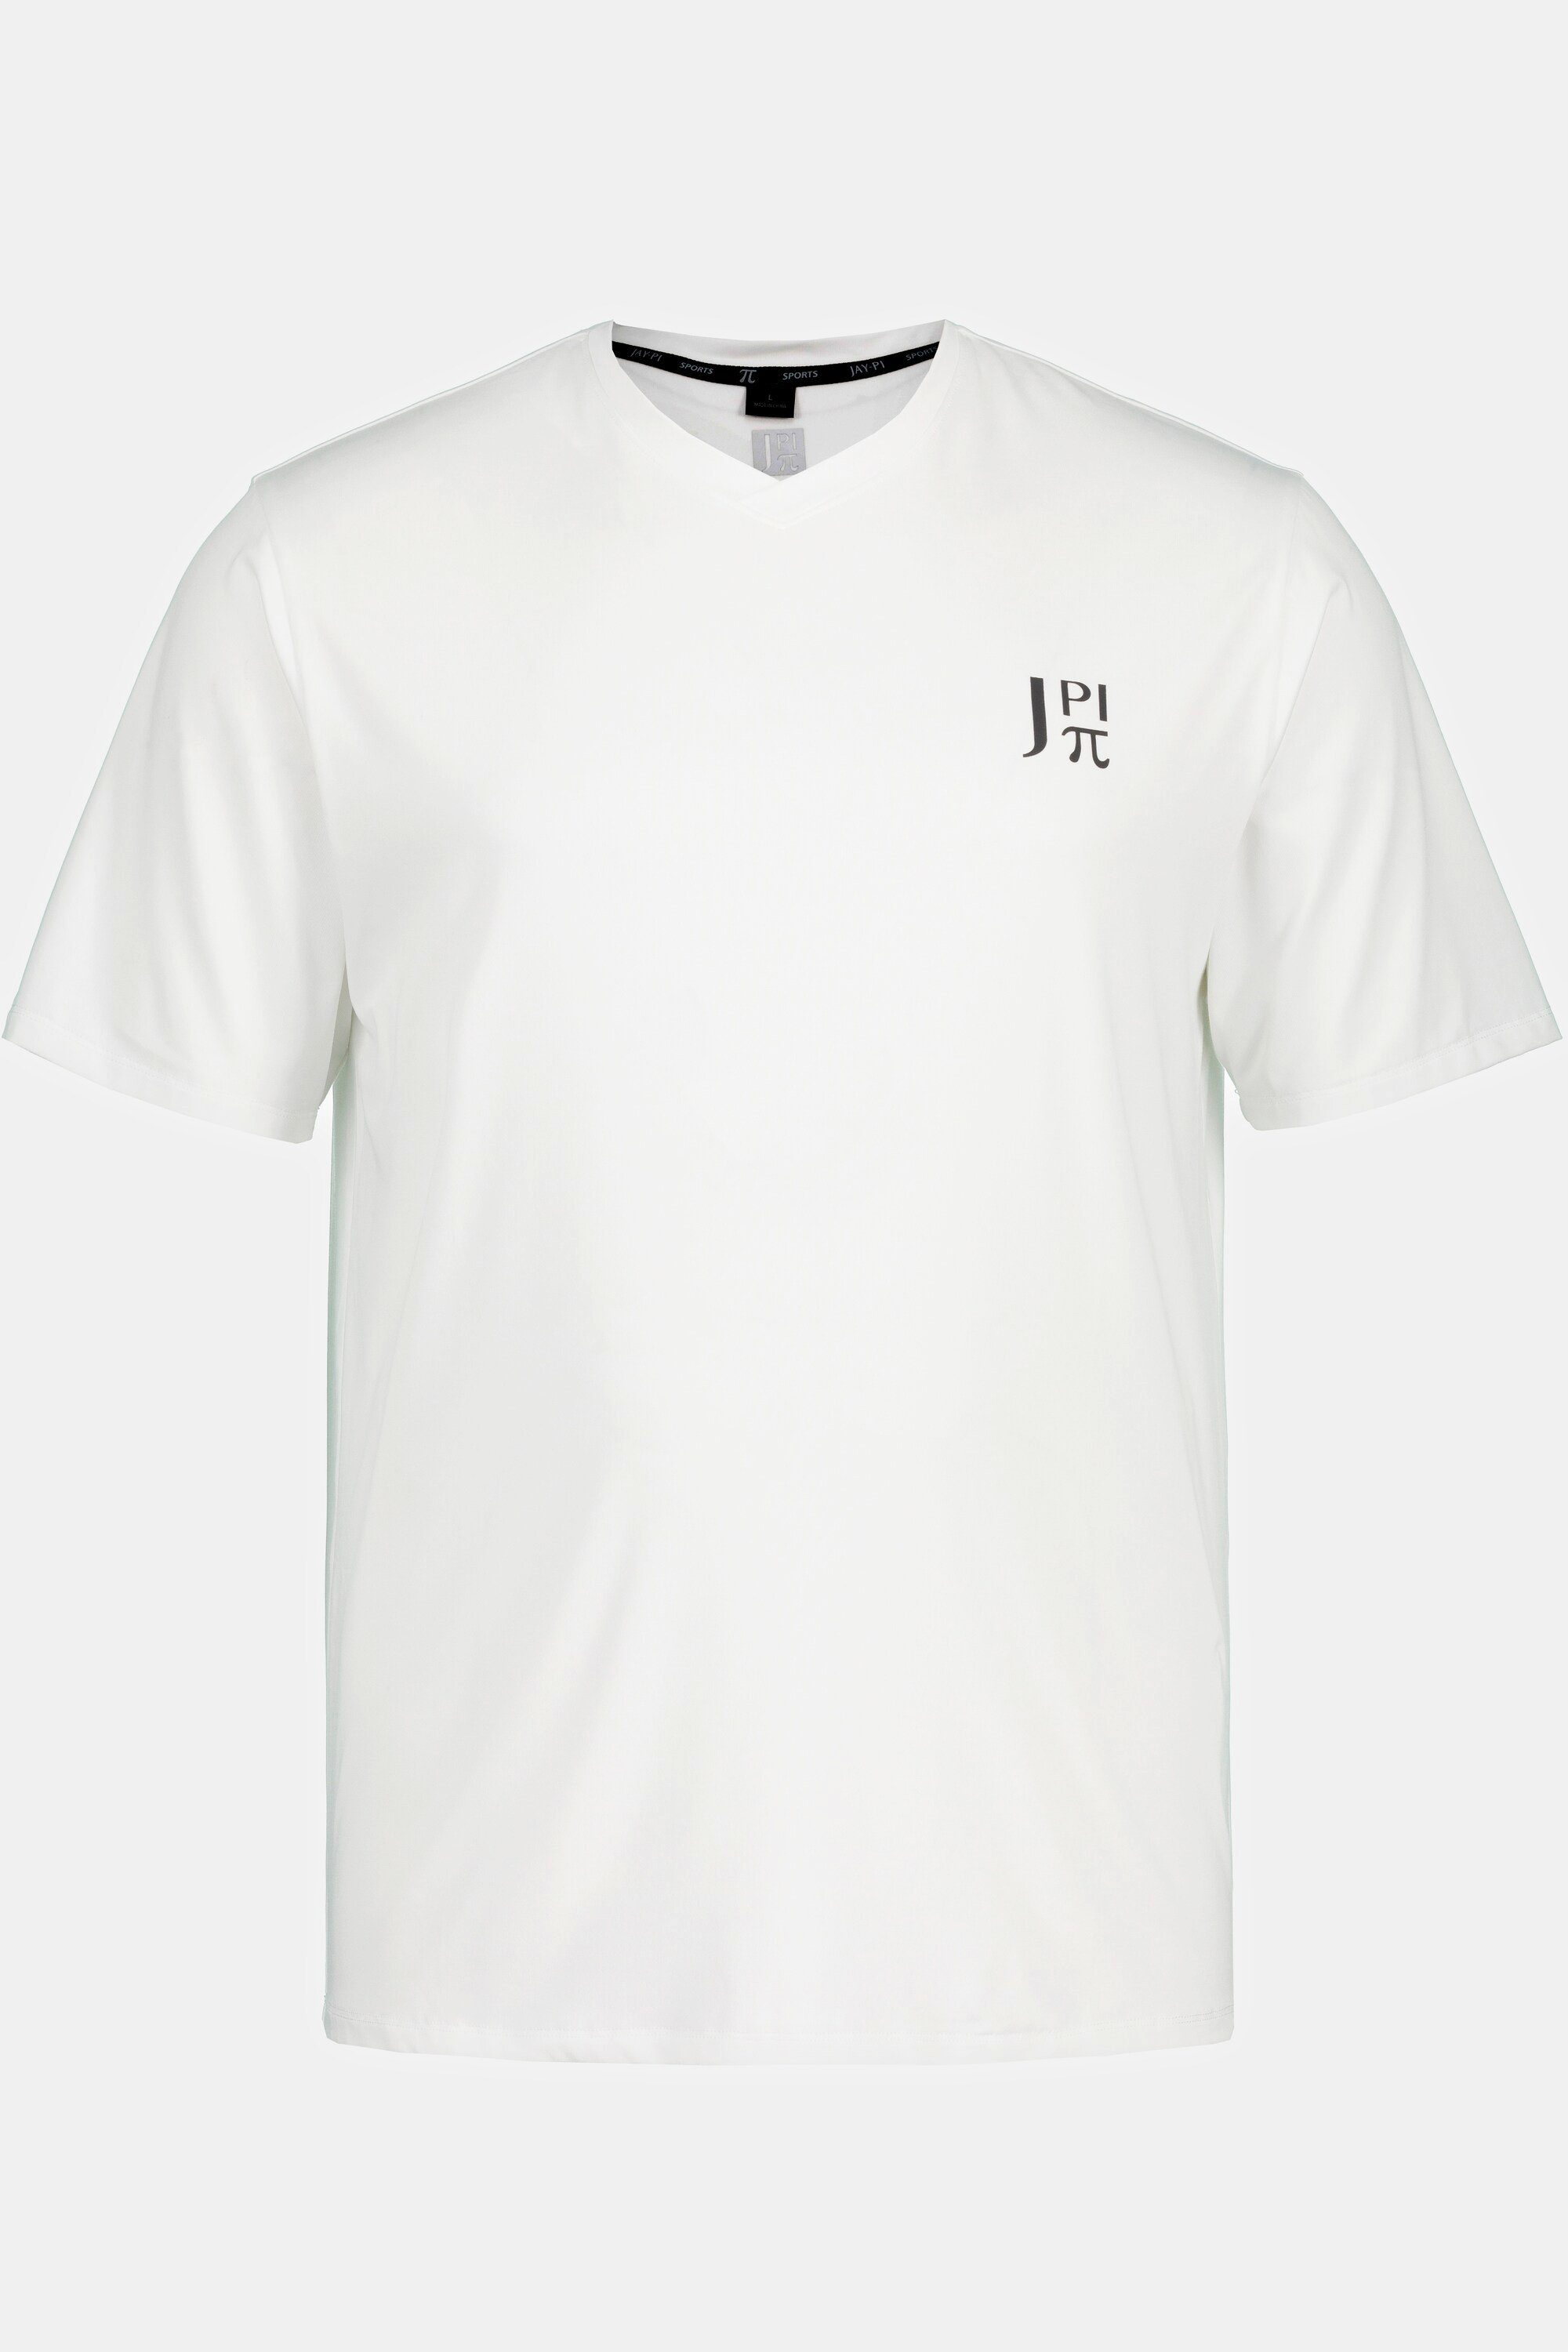 schneeweiß T-Shirt Fitness JP1880 Funktions-Shirt QuickDry